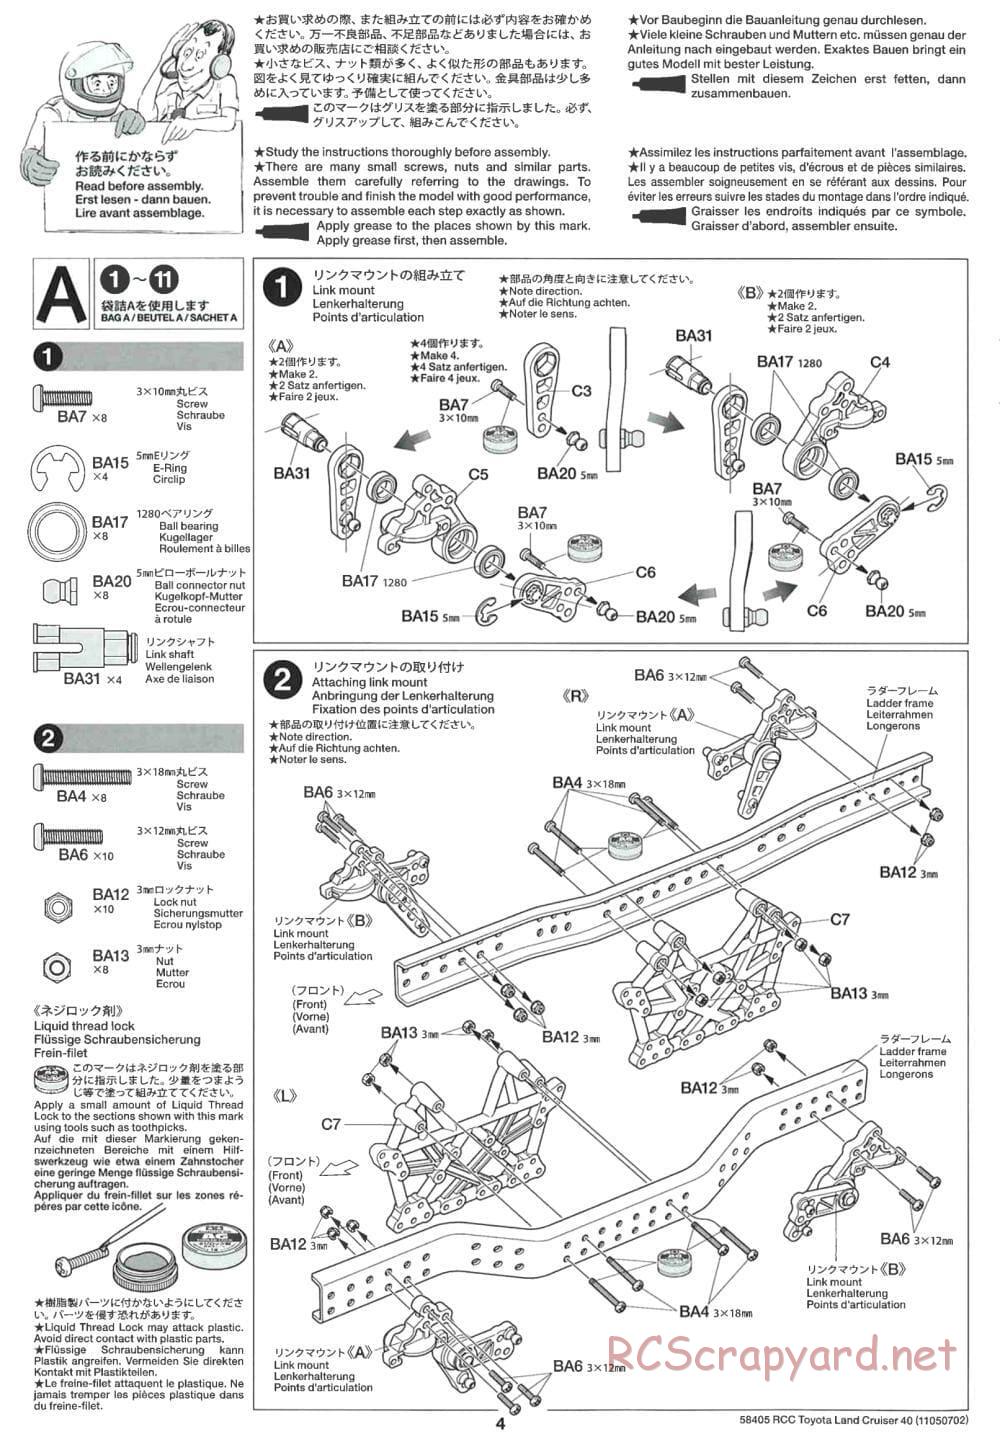 Tamiya - Toyota Land Cruiser 40 - CR-01 Chassis - Manual - Page 4